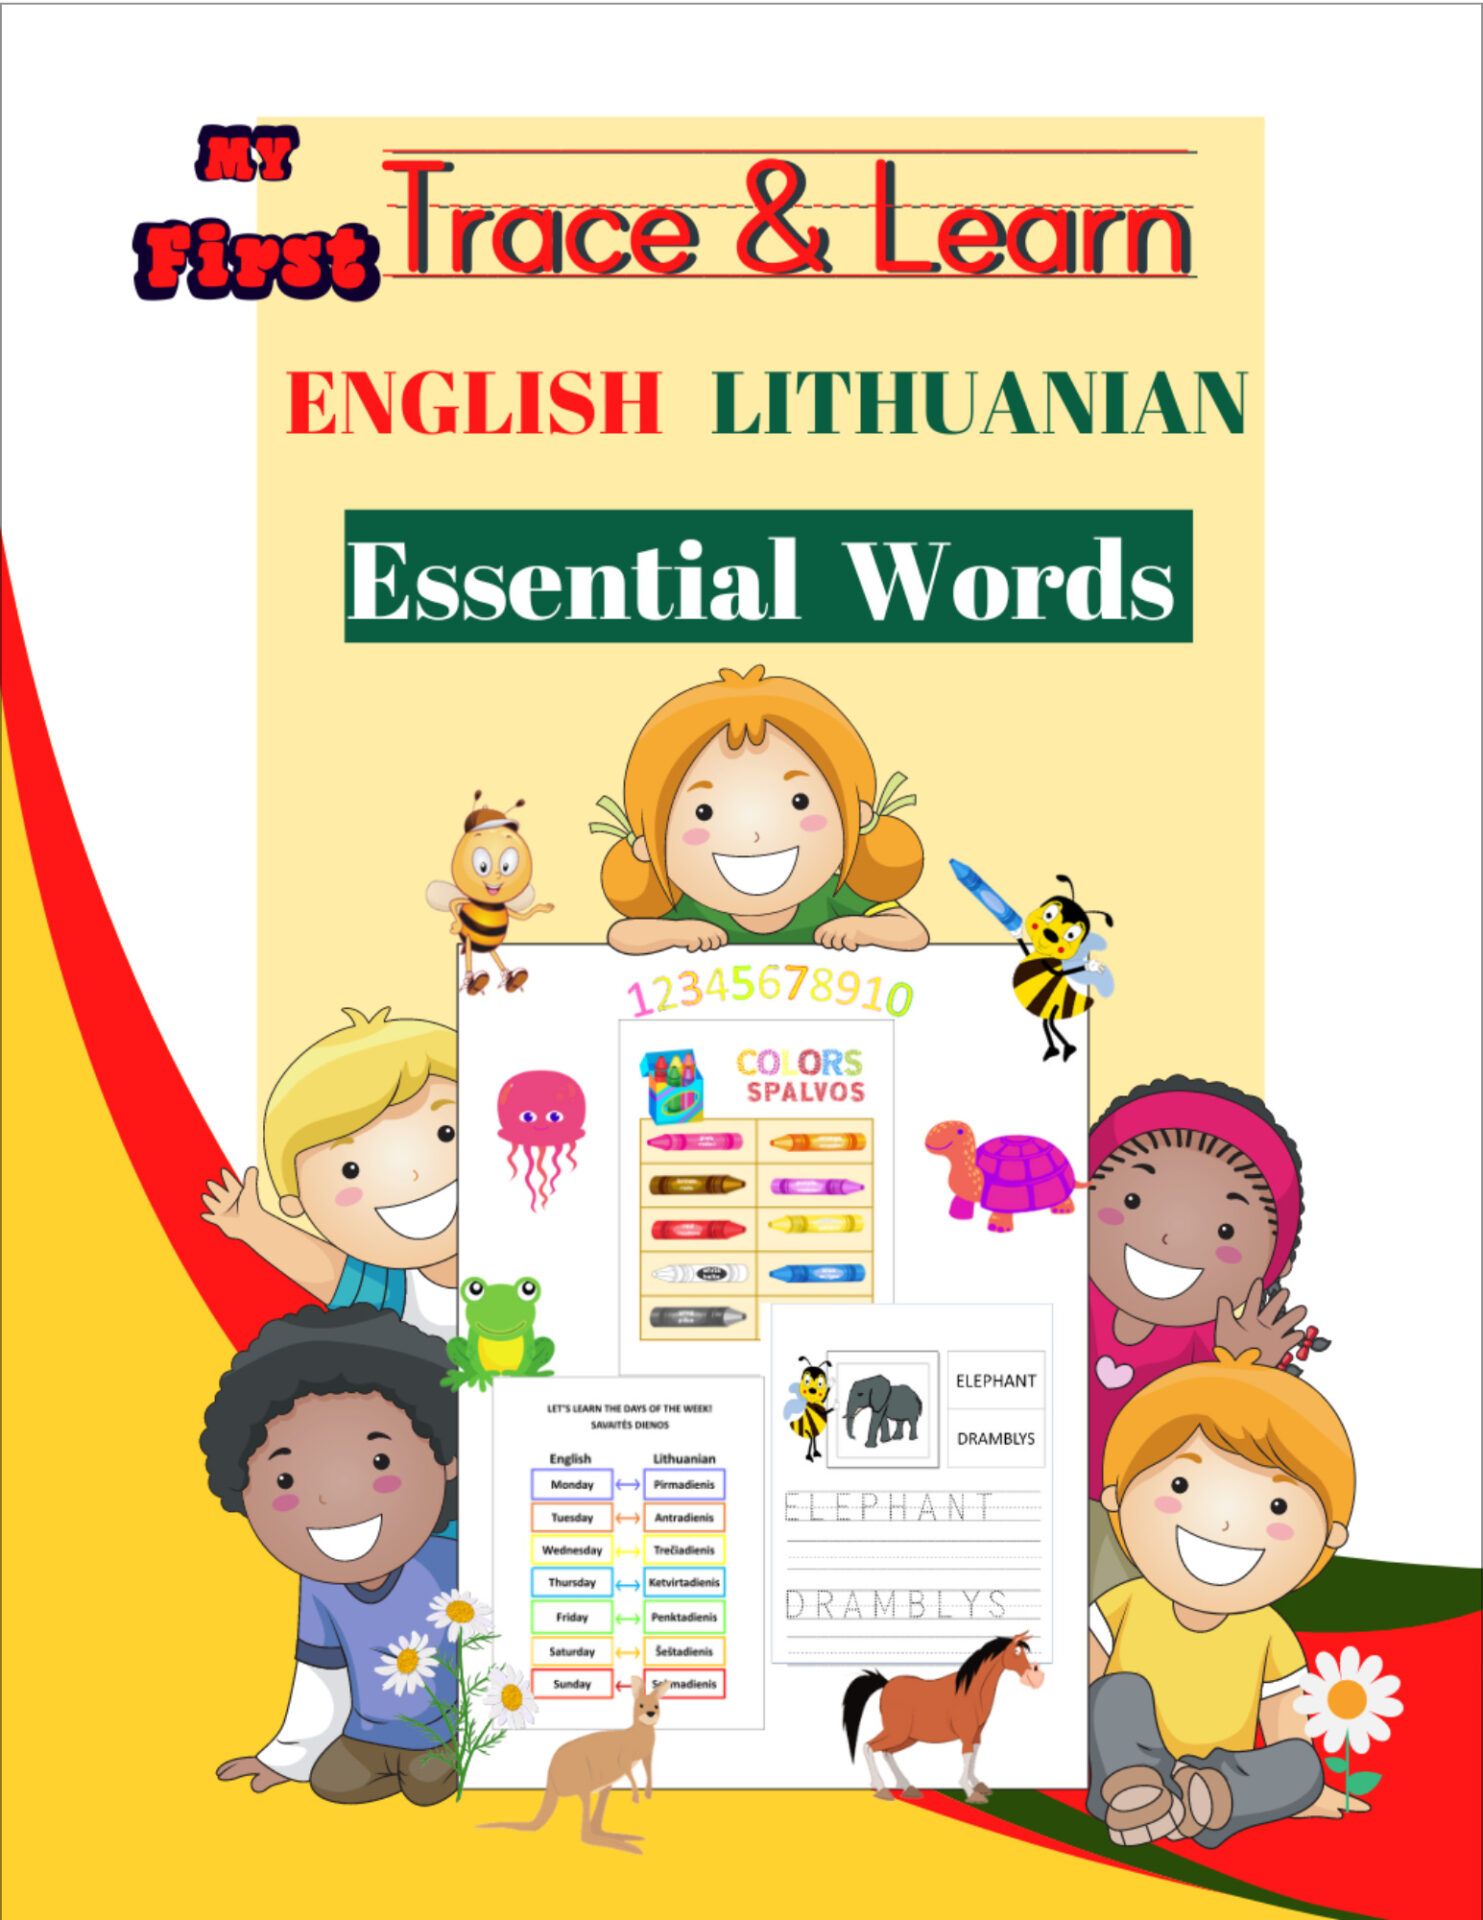 4 Essential English Words  English words, Learn english, Words